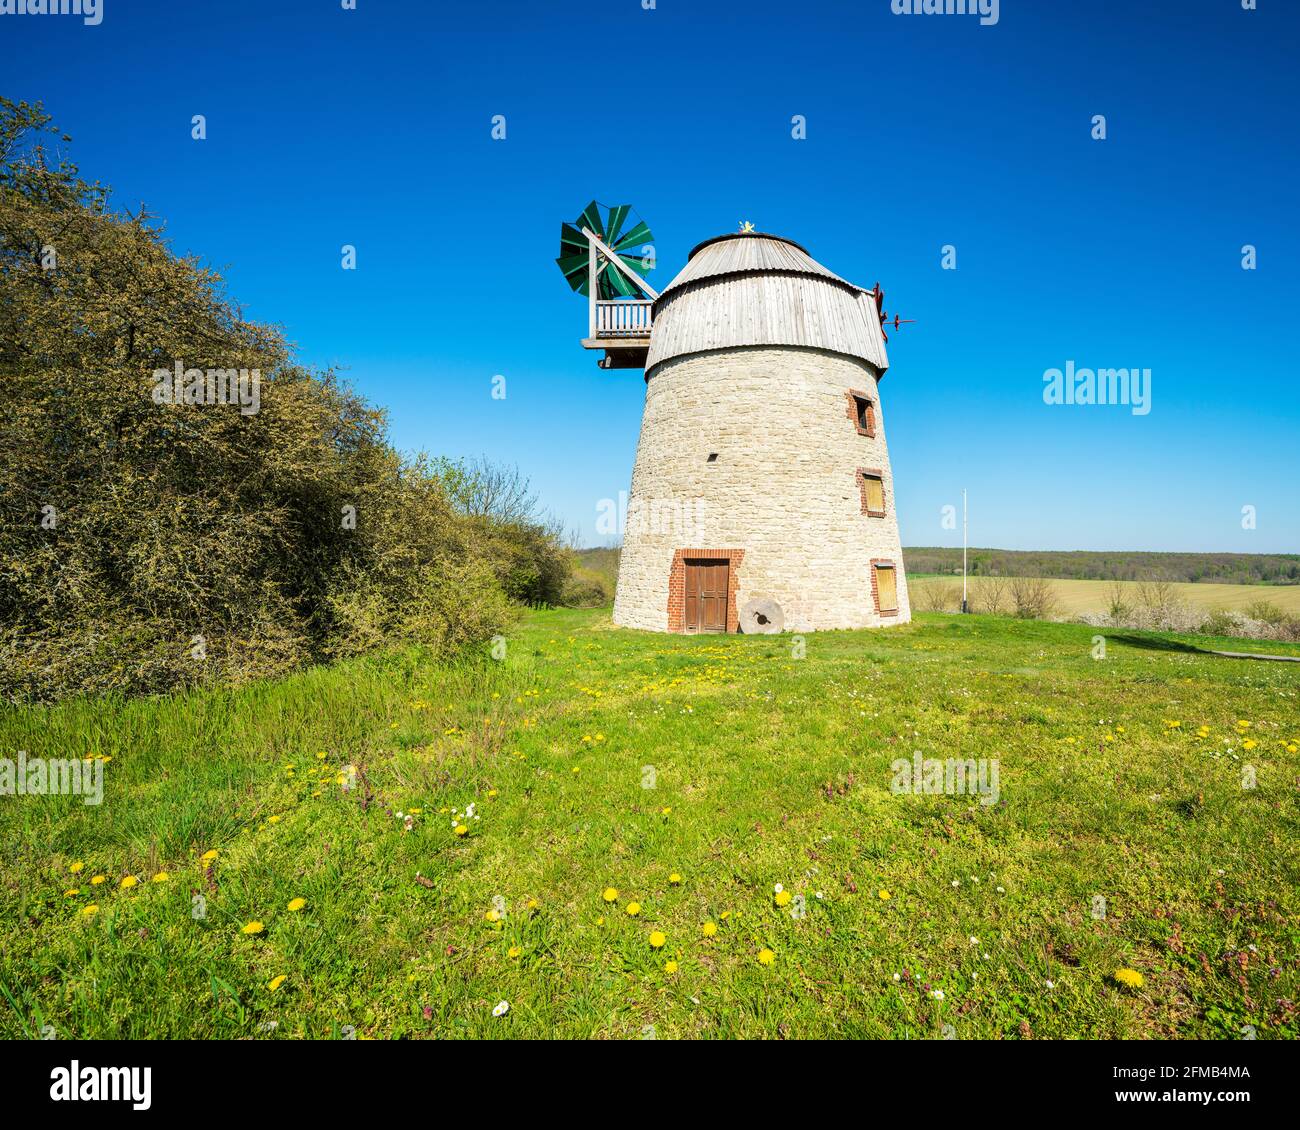 Germany, Saxony-Anhalt, Eckartsberga, the tower windmill of Eckartsberga in spring Stock Photo